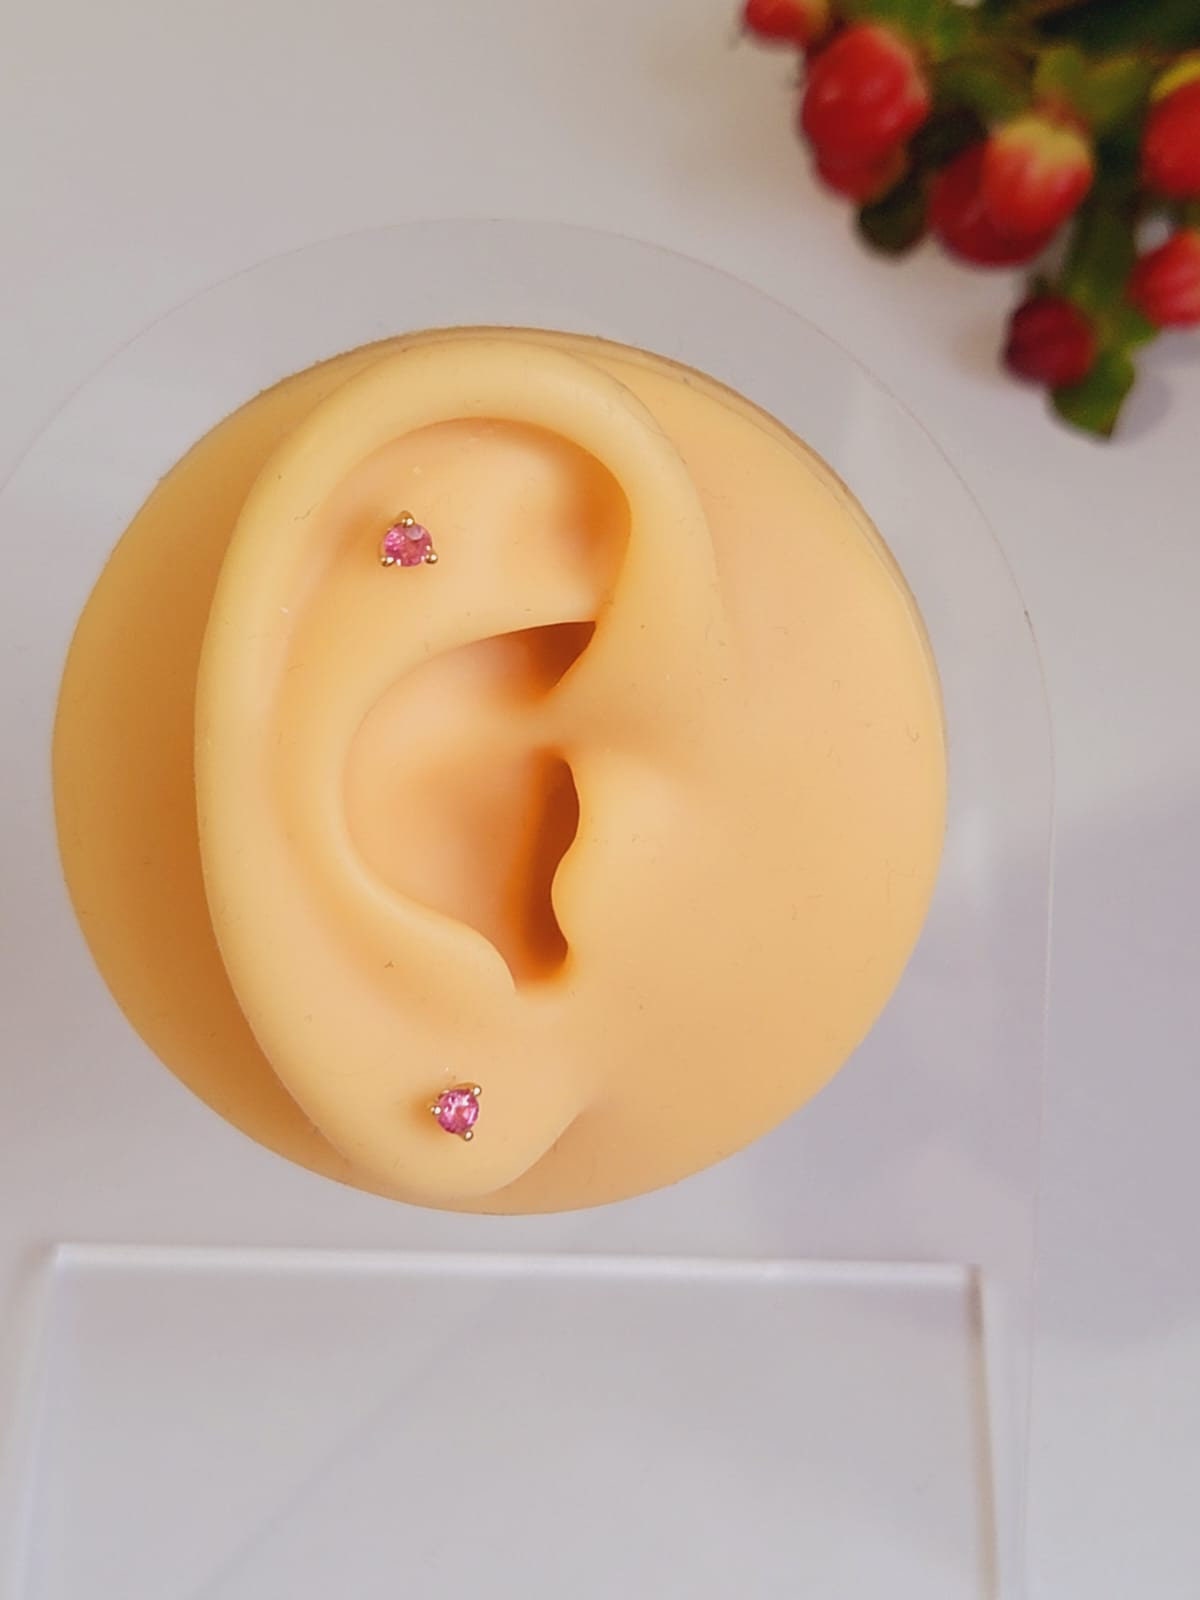 Round Pink Sapphire Stud Earrings